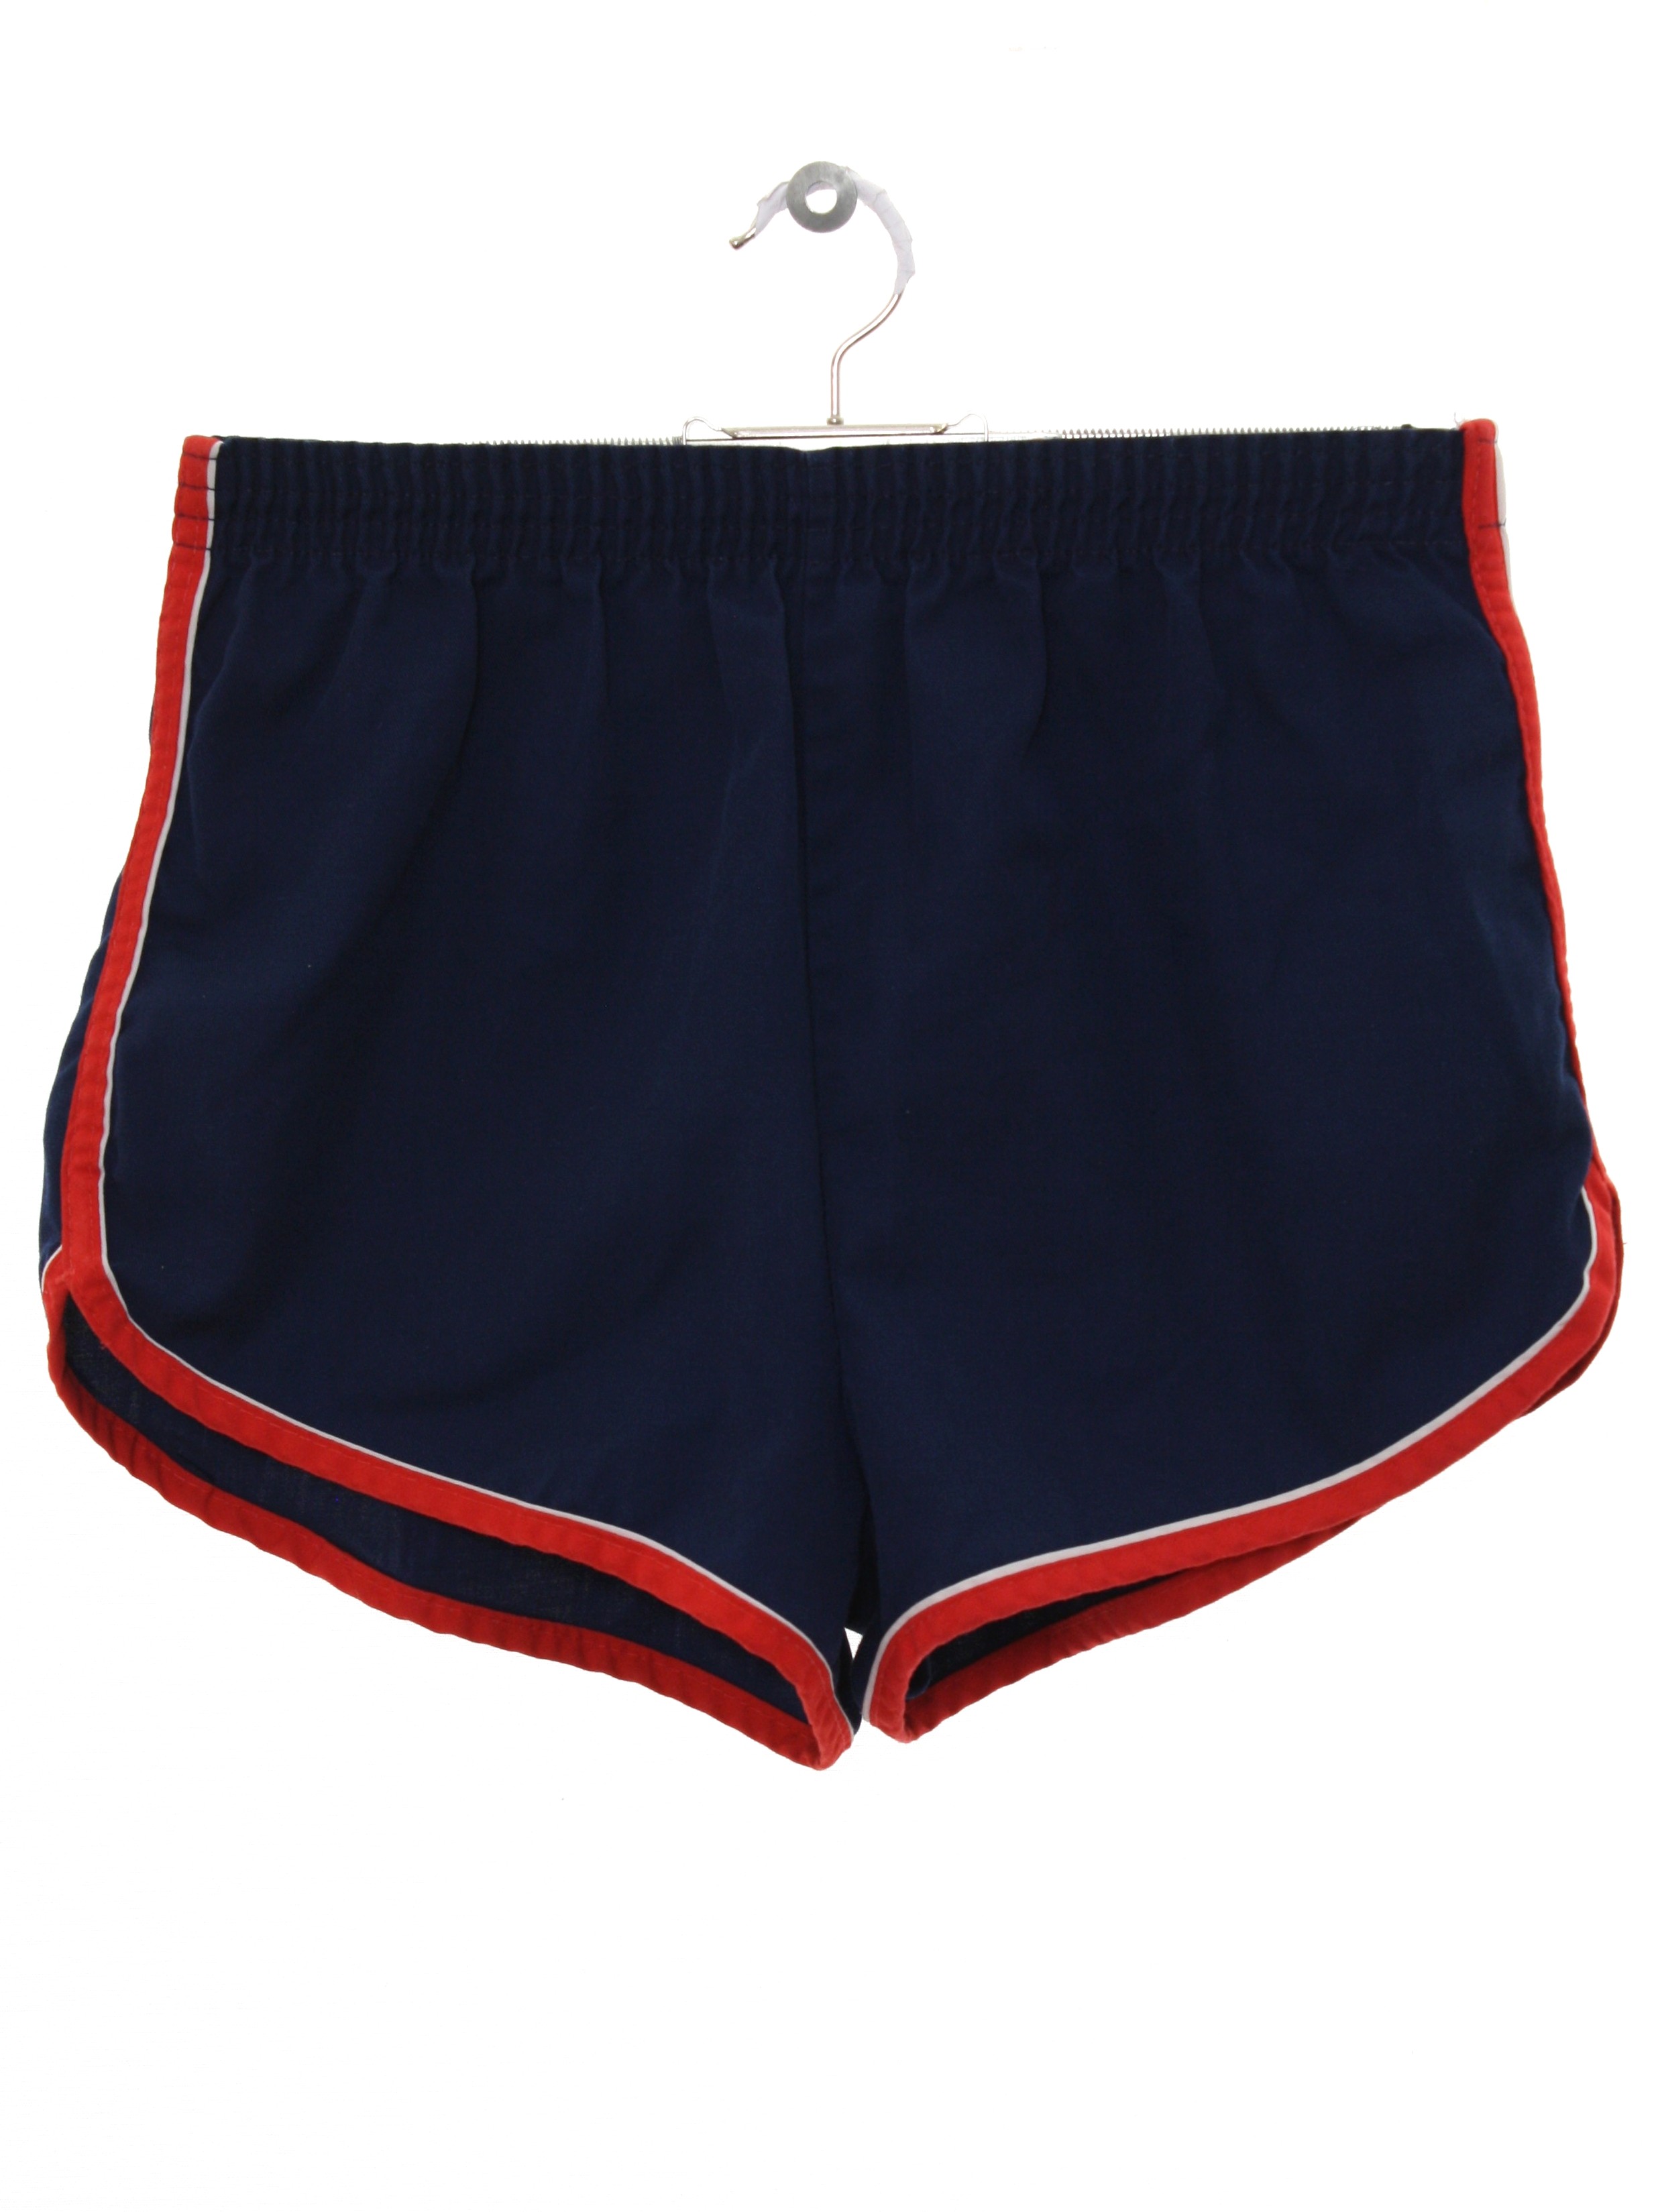 70s Shorts (Unreadable Label): 70s -Unreadable Label- Unisex midnight ...